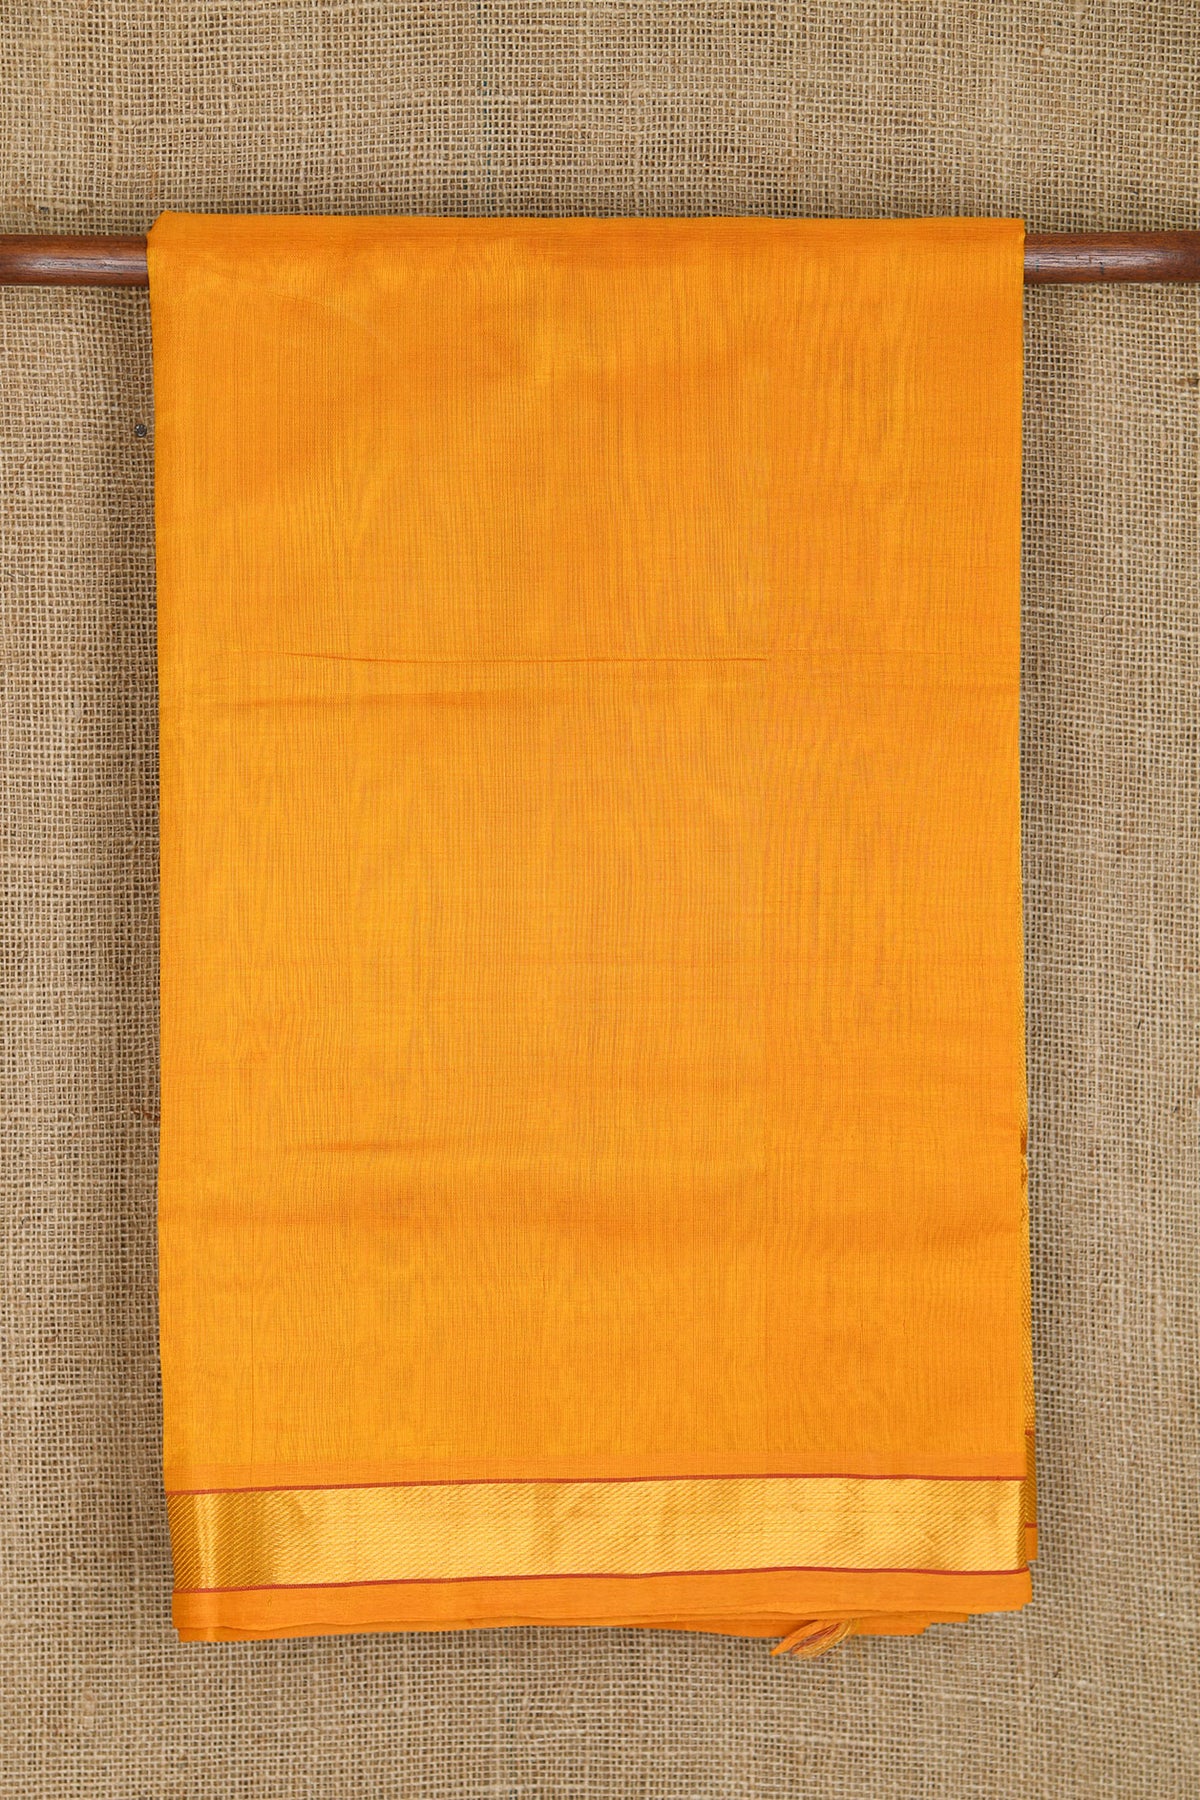 Twill Weave Zari Border In Plain Marigold Yellow Silk Cotton Saree